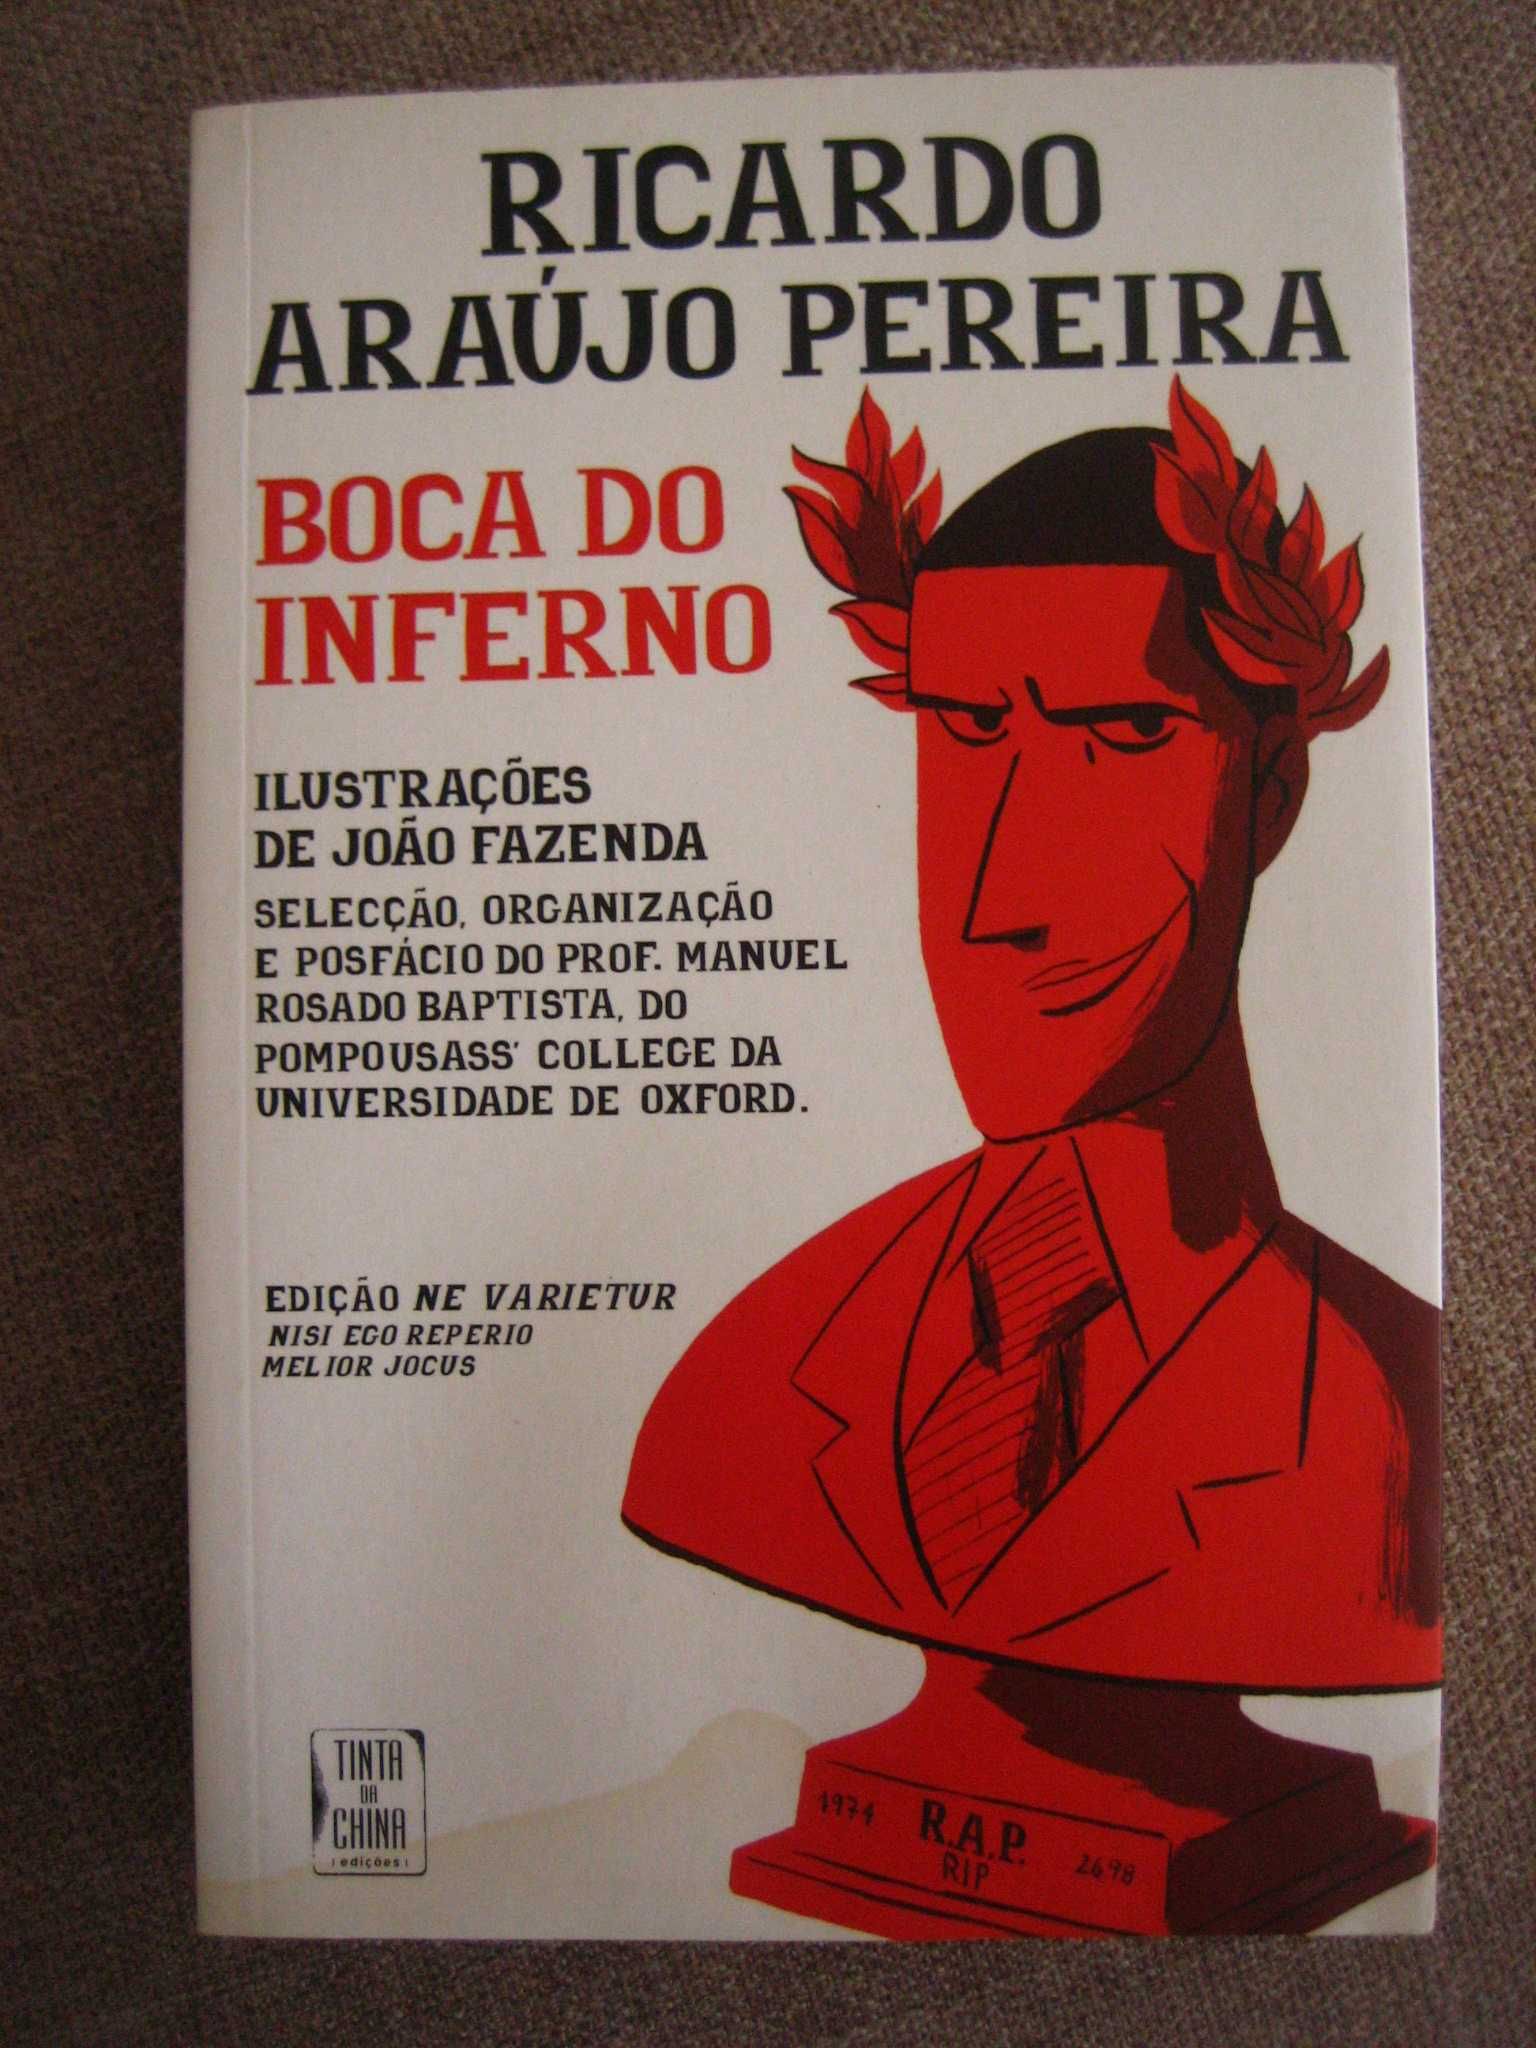 Livro "Boca do Inferno" de Ricardo Araújo Pereira